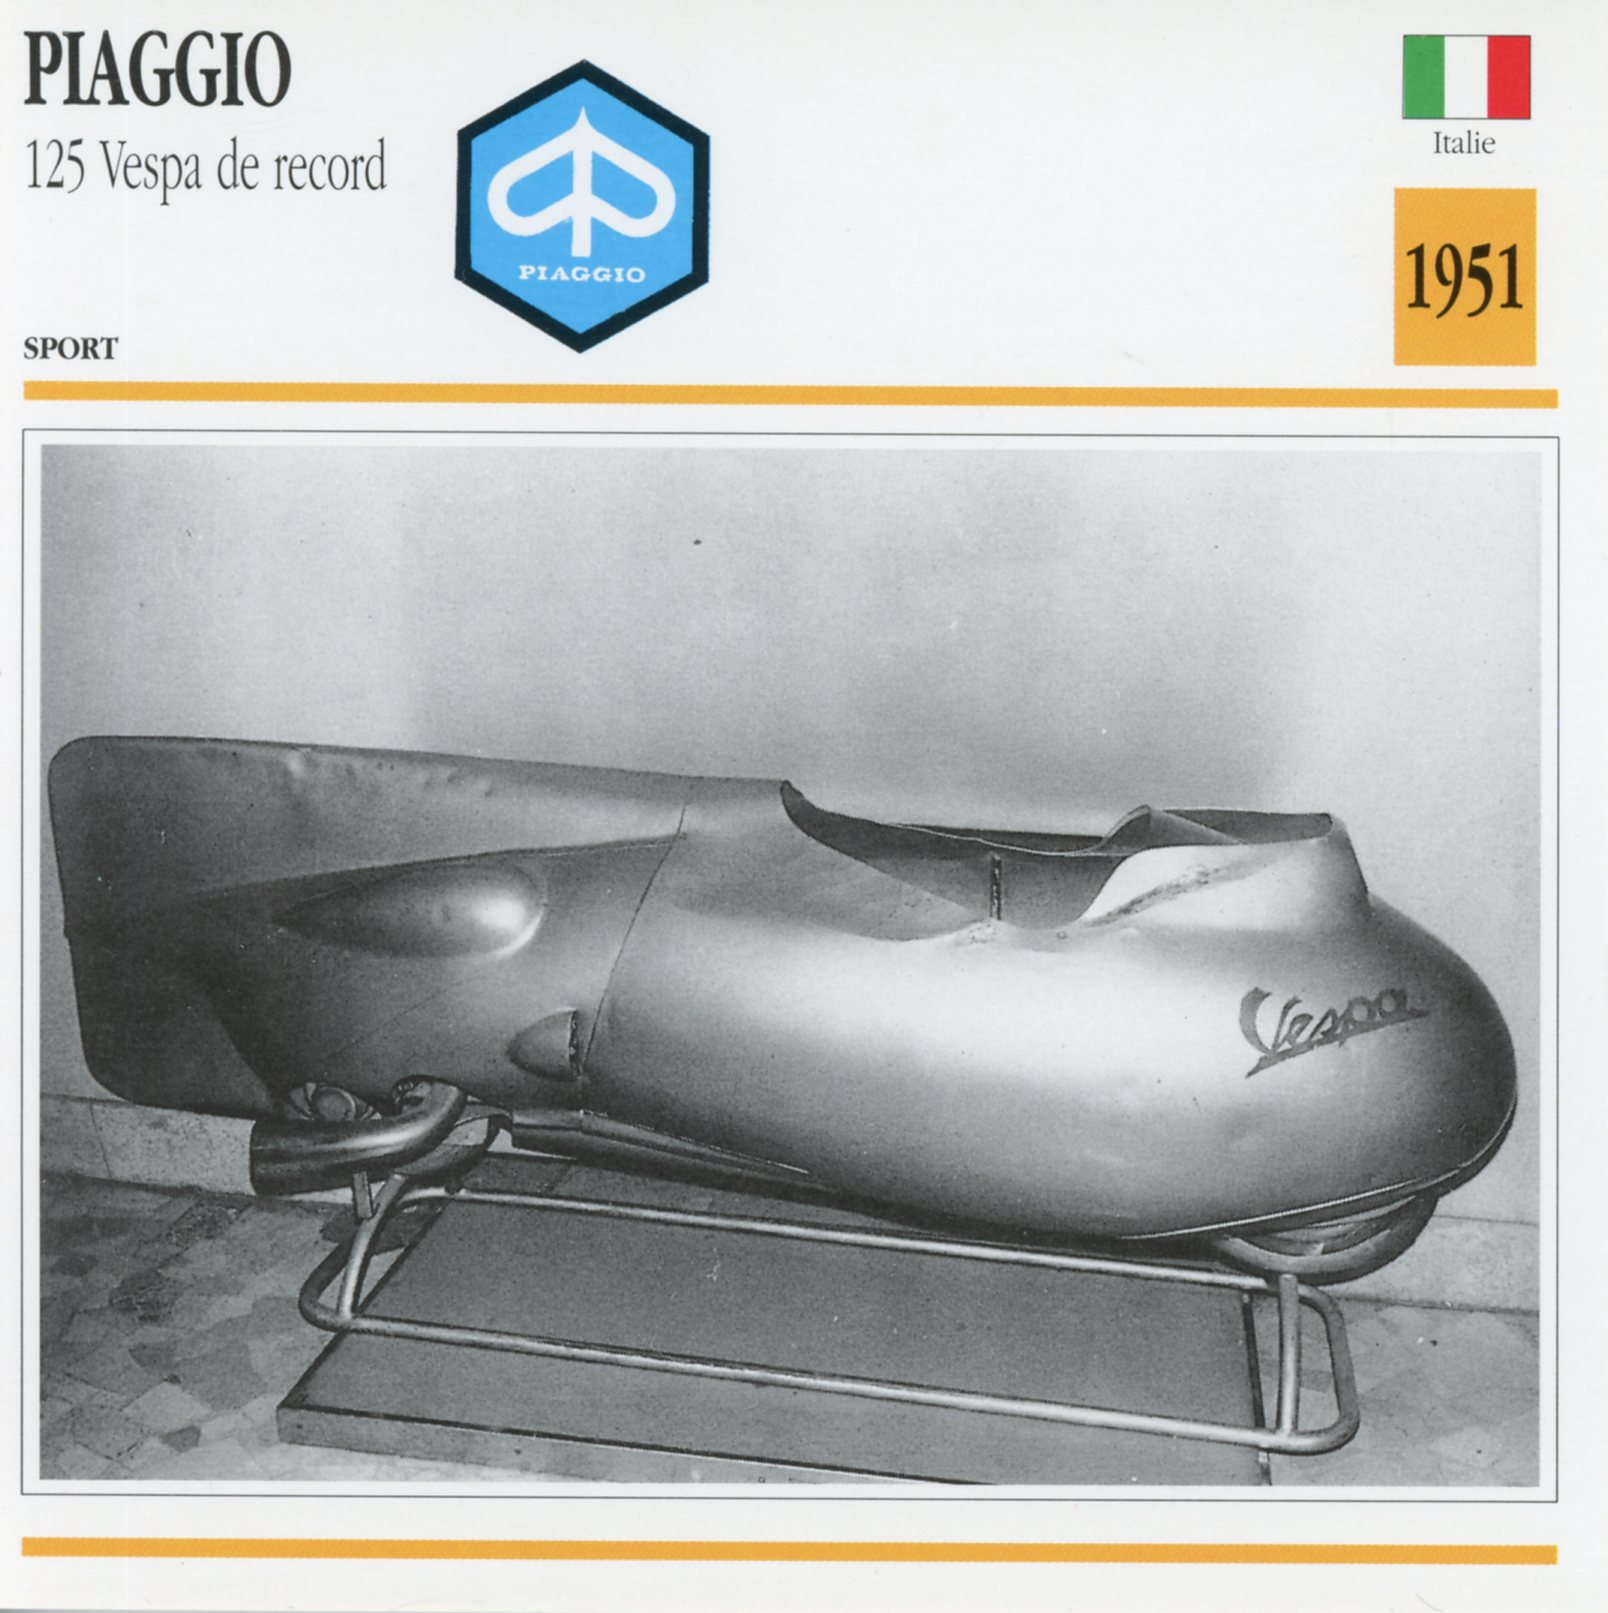 PIAGGIO-VESPA-125-RECORD-LEMASTERBROCKERS-FICHE-SCOOTER-CARD-ATLAS